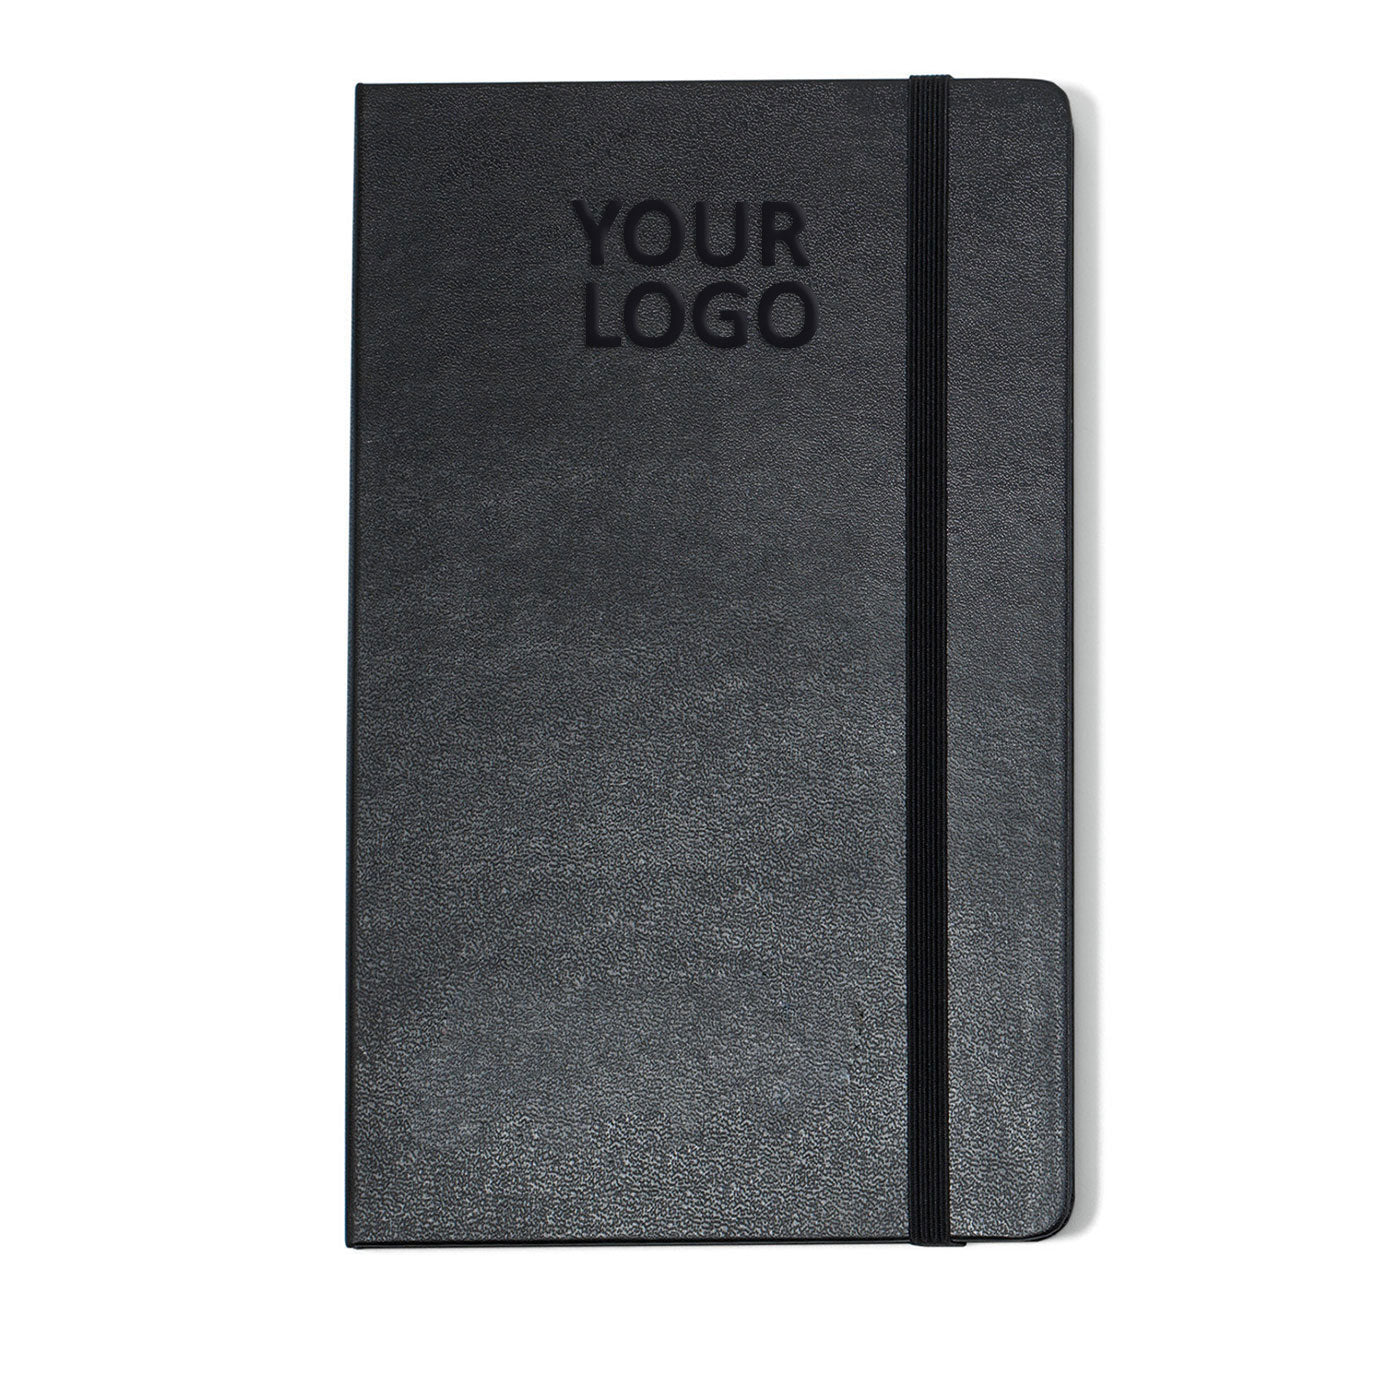 Moleskine Hard Cover Plain Large Notebook Black